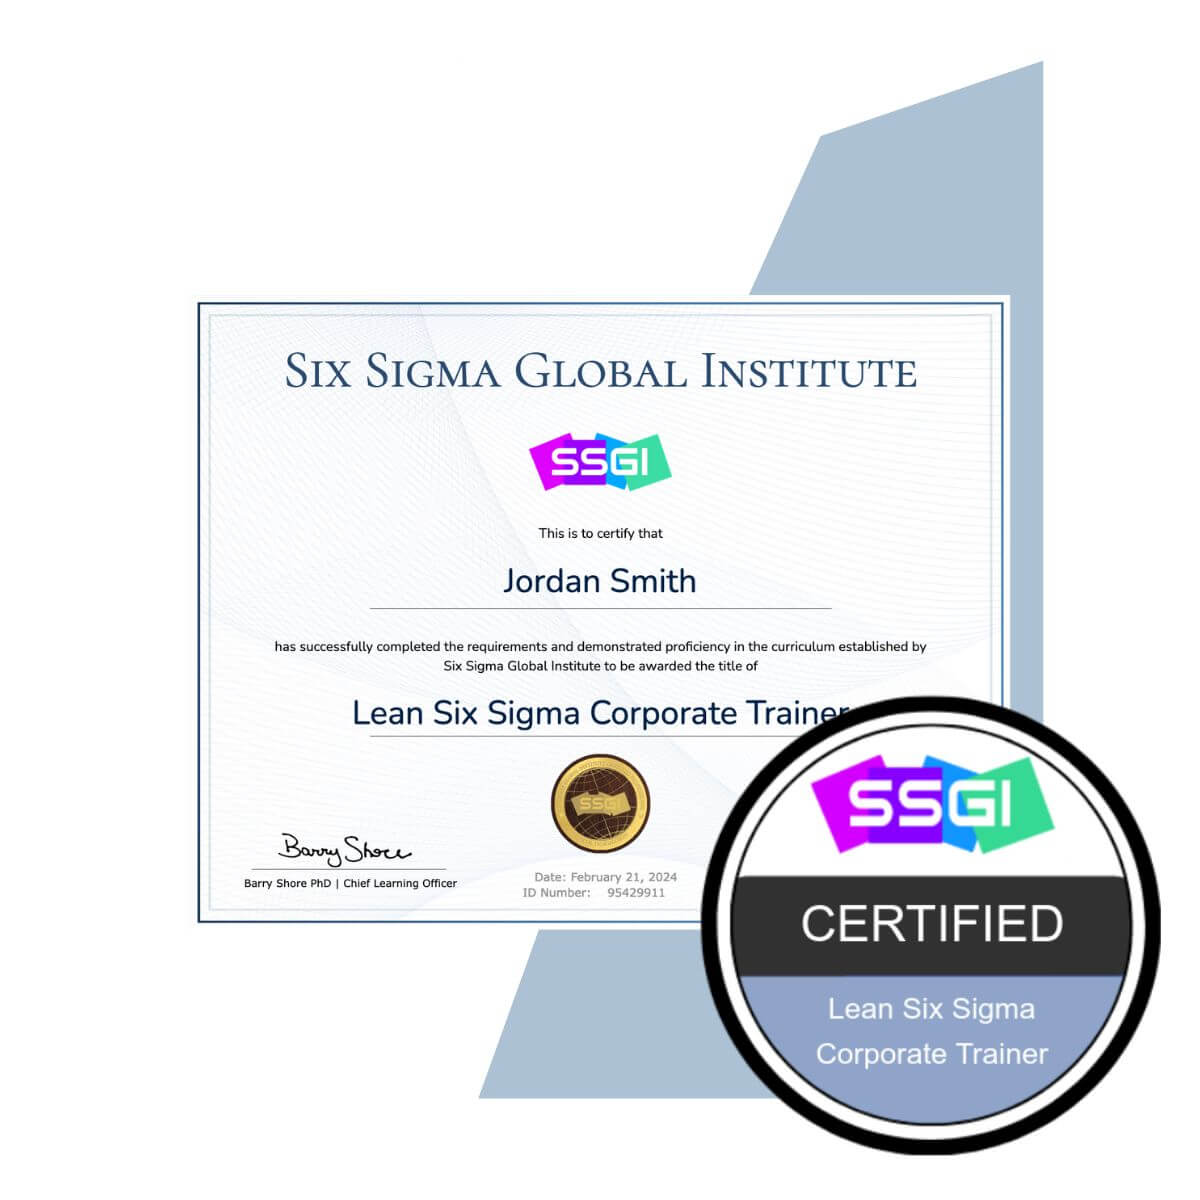 SSGI Lean Six Sigma Corporate Trainer